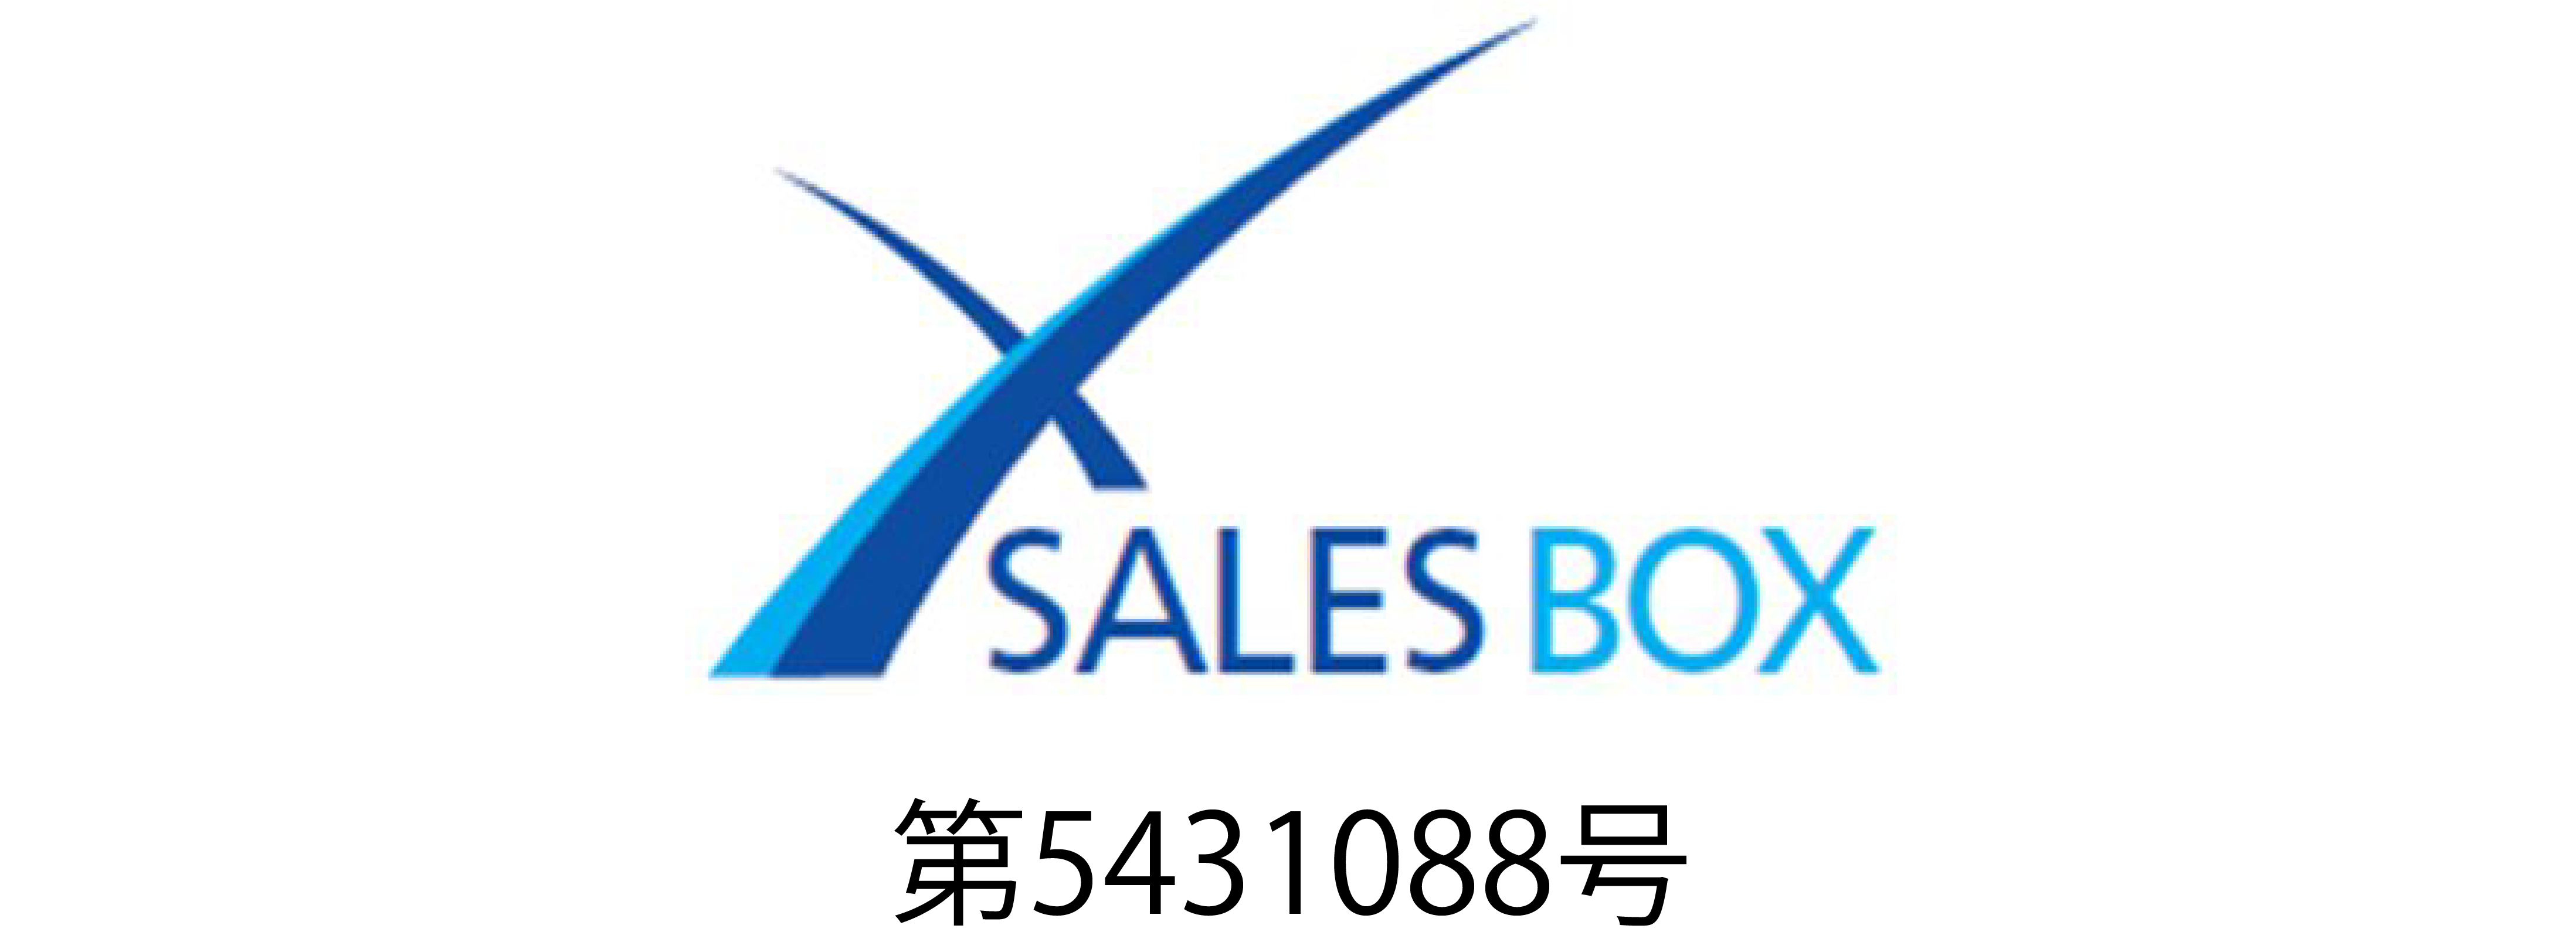 salesbox-logo